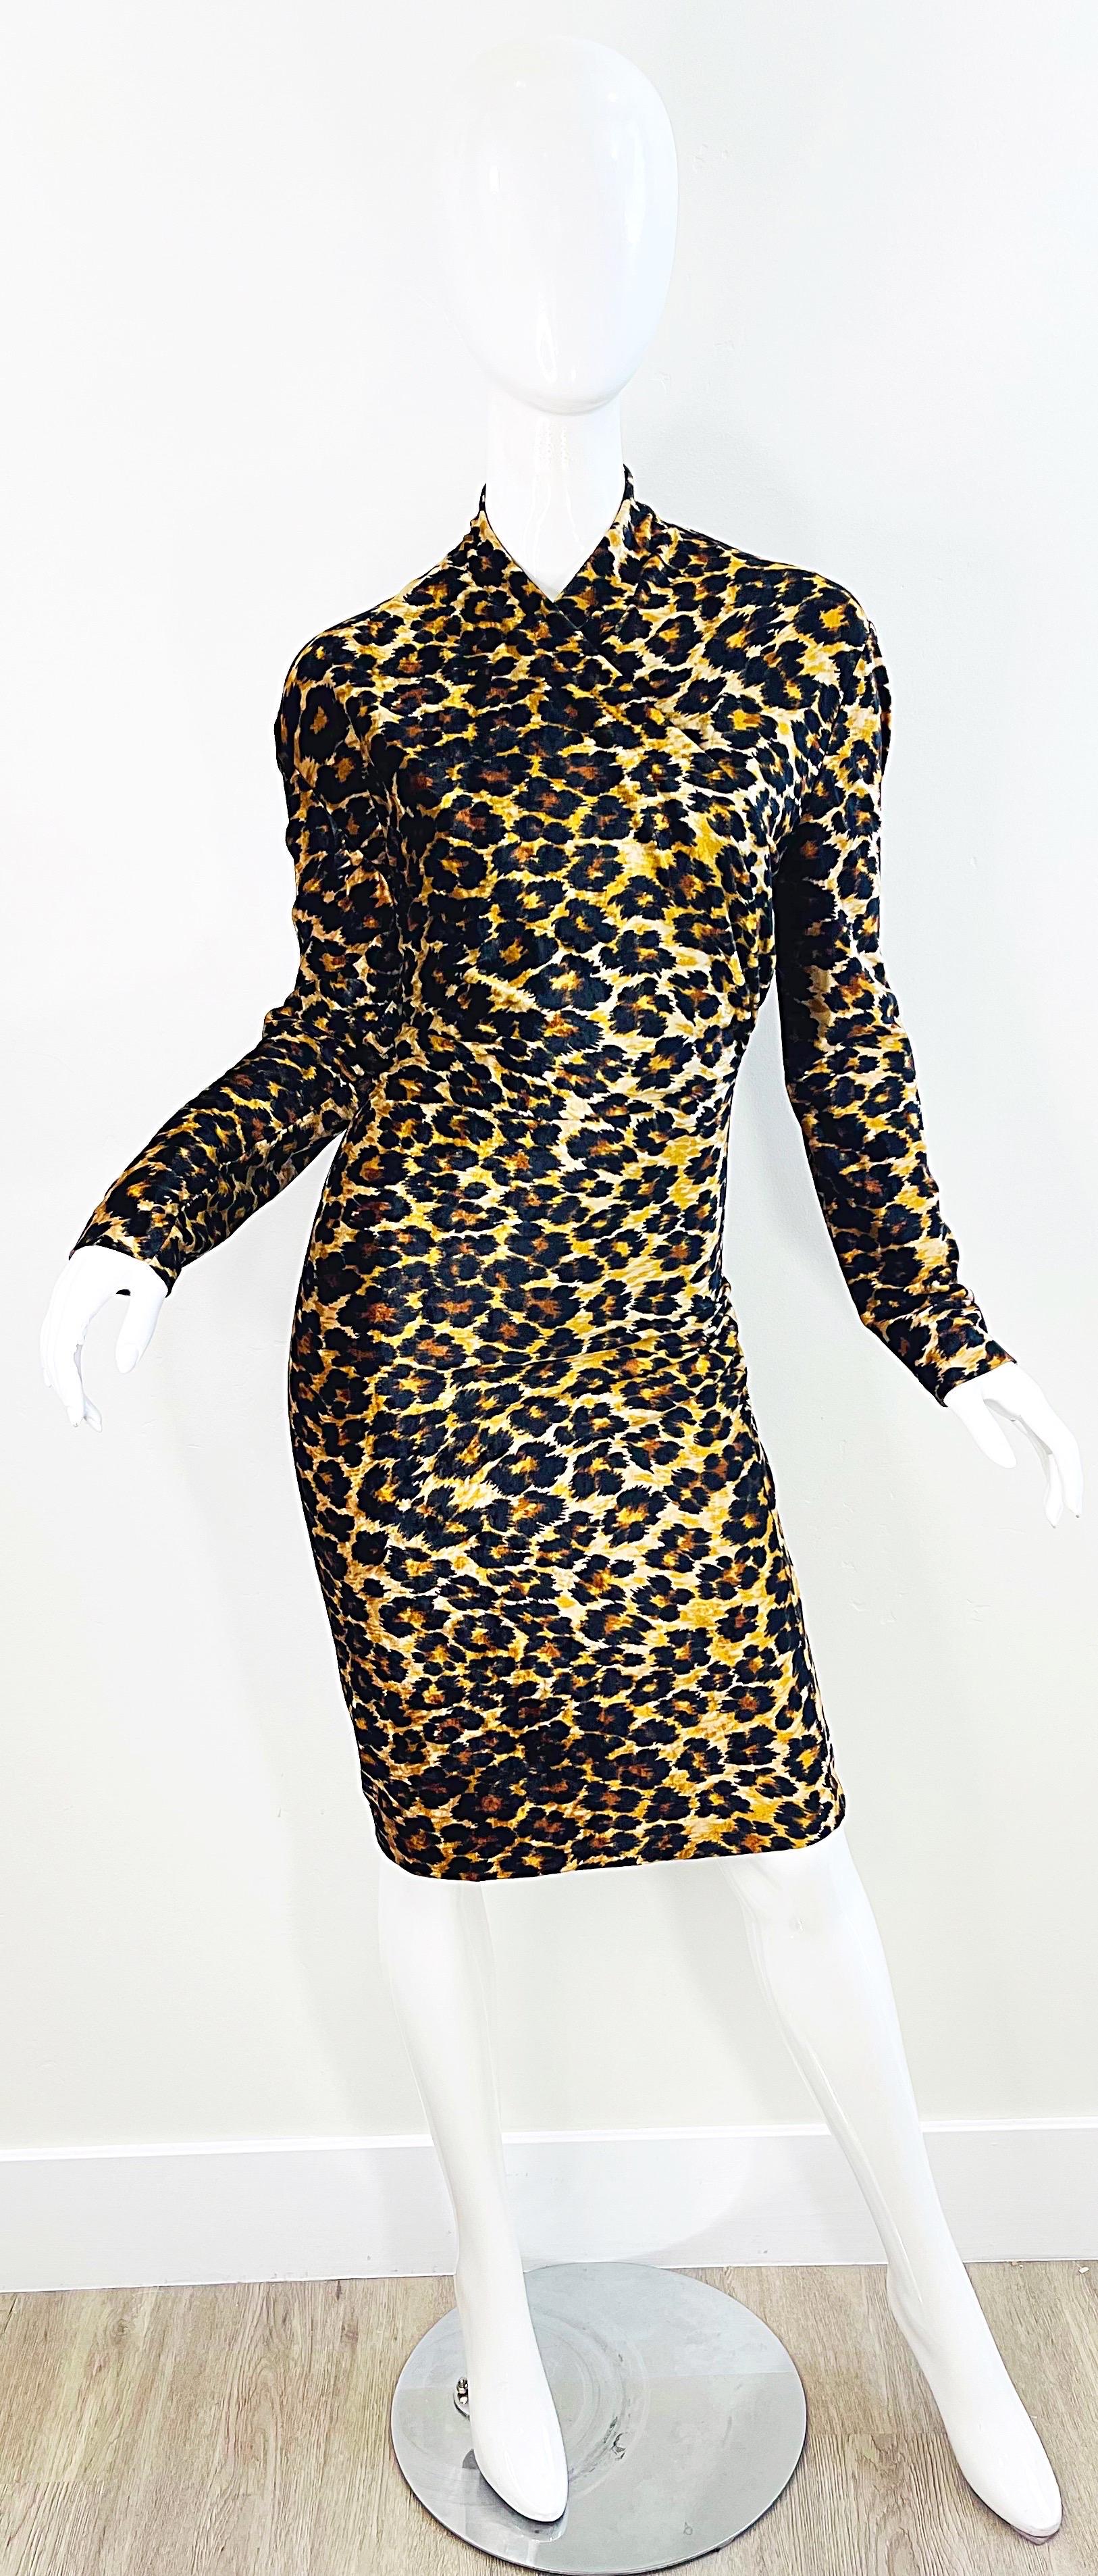 Documented Patrick Kelly 1989 Leopard Print Size Large Velour Vintage Dress 80s For Sale 11